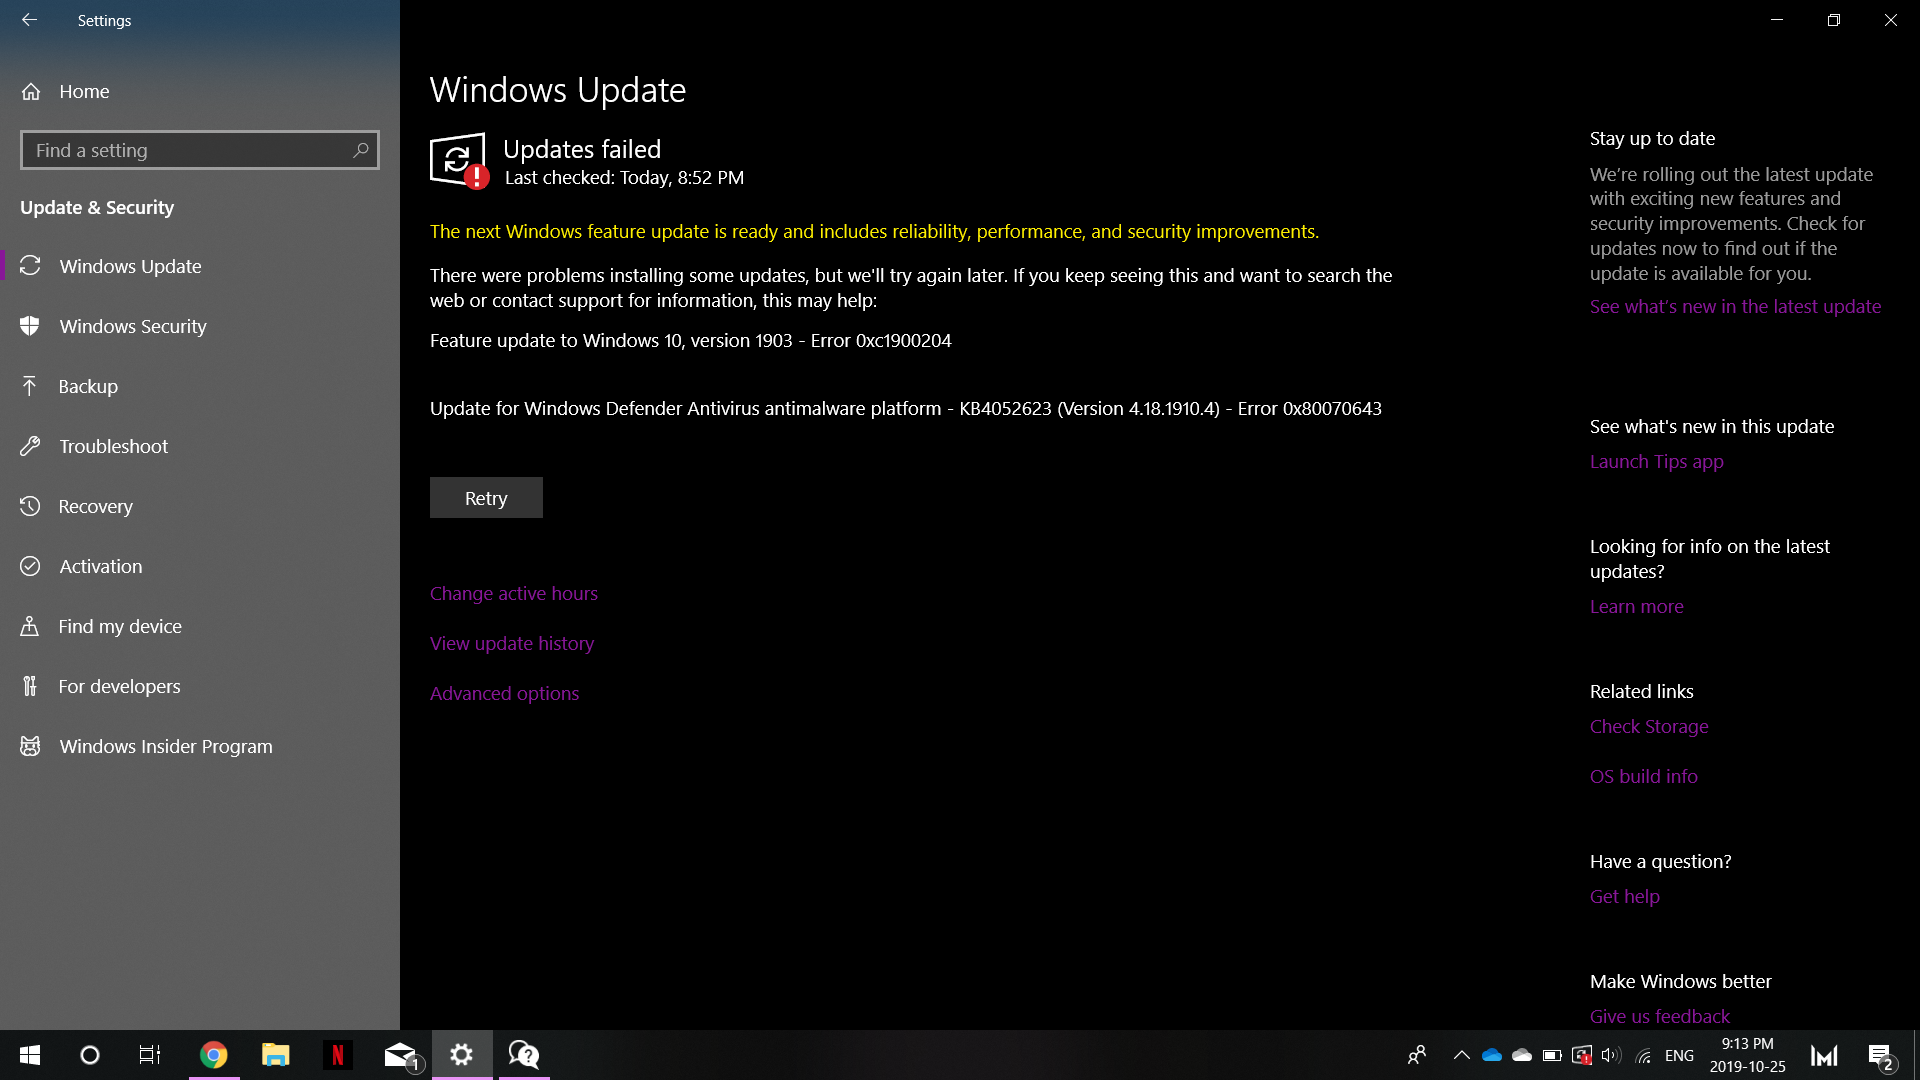 Feature update to Windows 10, version 1903 - Error 0xc1900204 a6b652bb-ec68-4546-98b5-5fe0b02ed1c9?upload=true.png